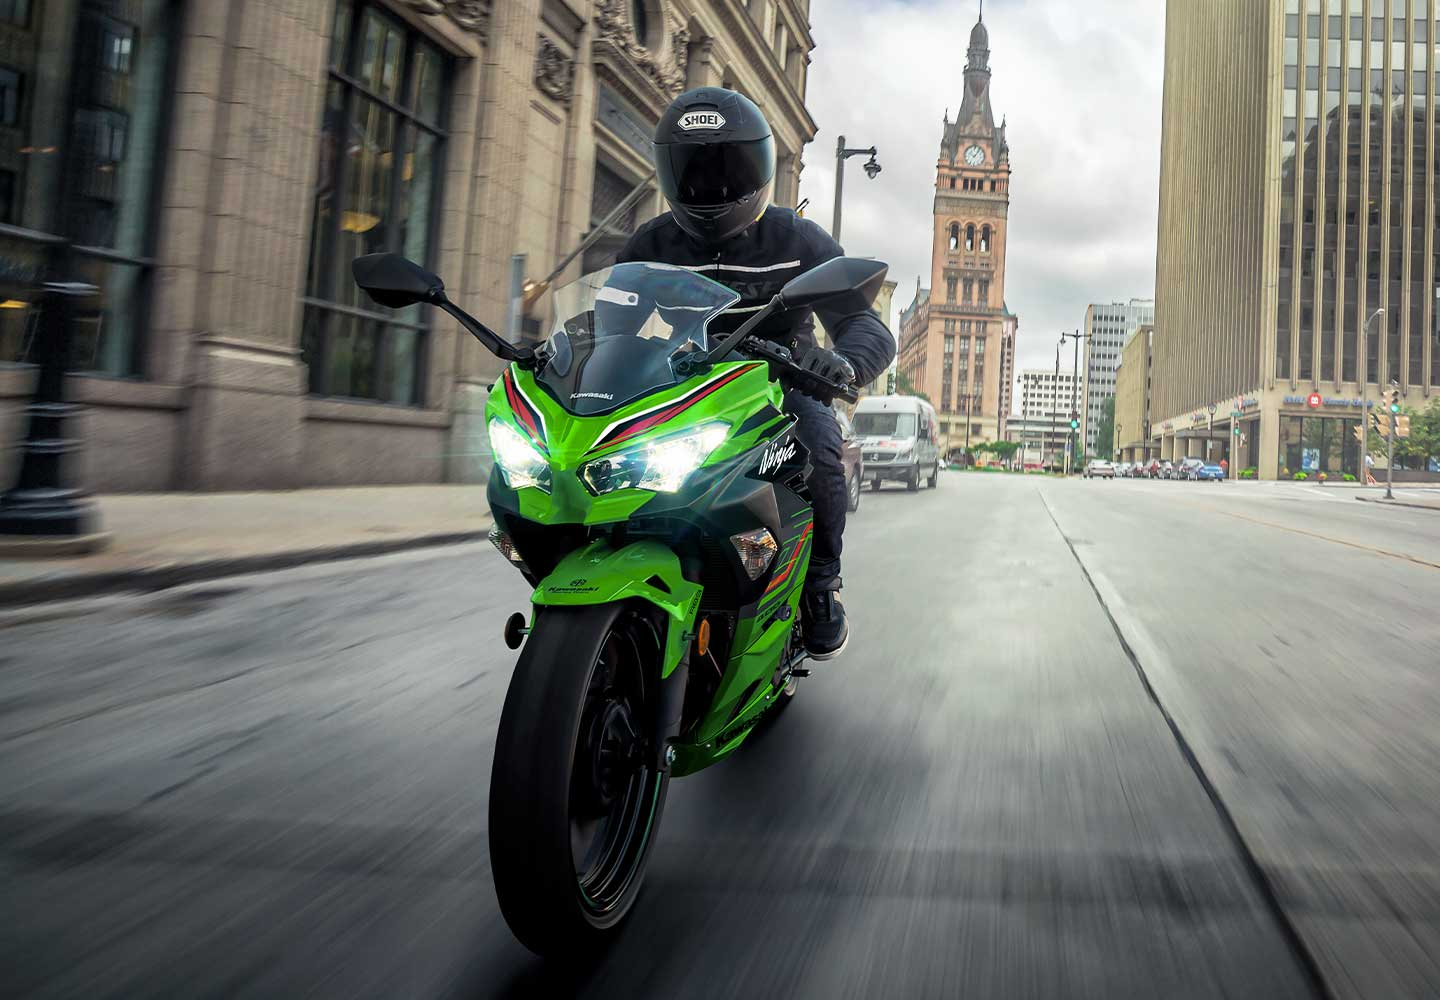 Kawasaki Ninja 250 | スポーツモーターサイクル| スムーズさと軽快さ